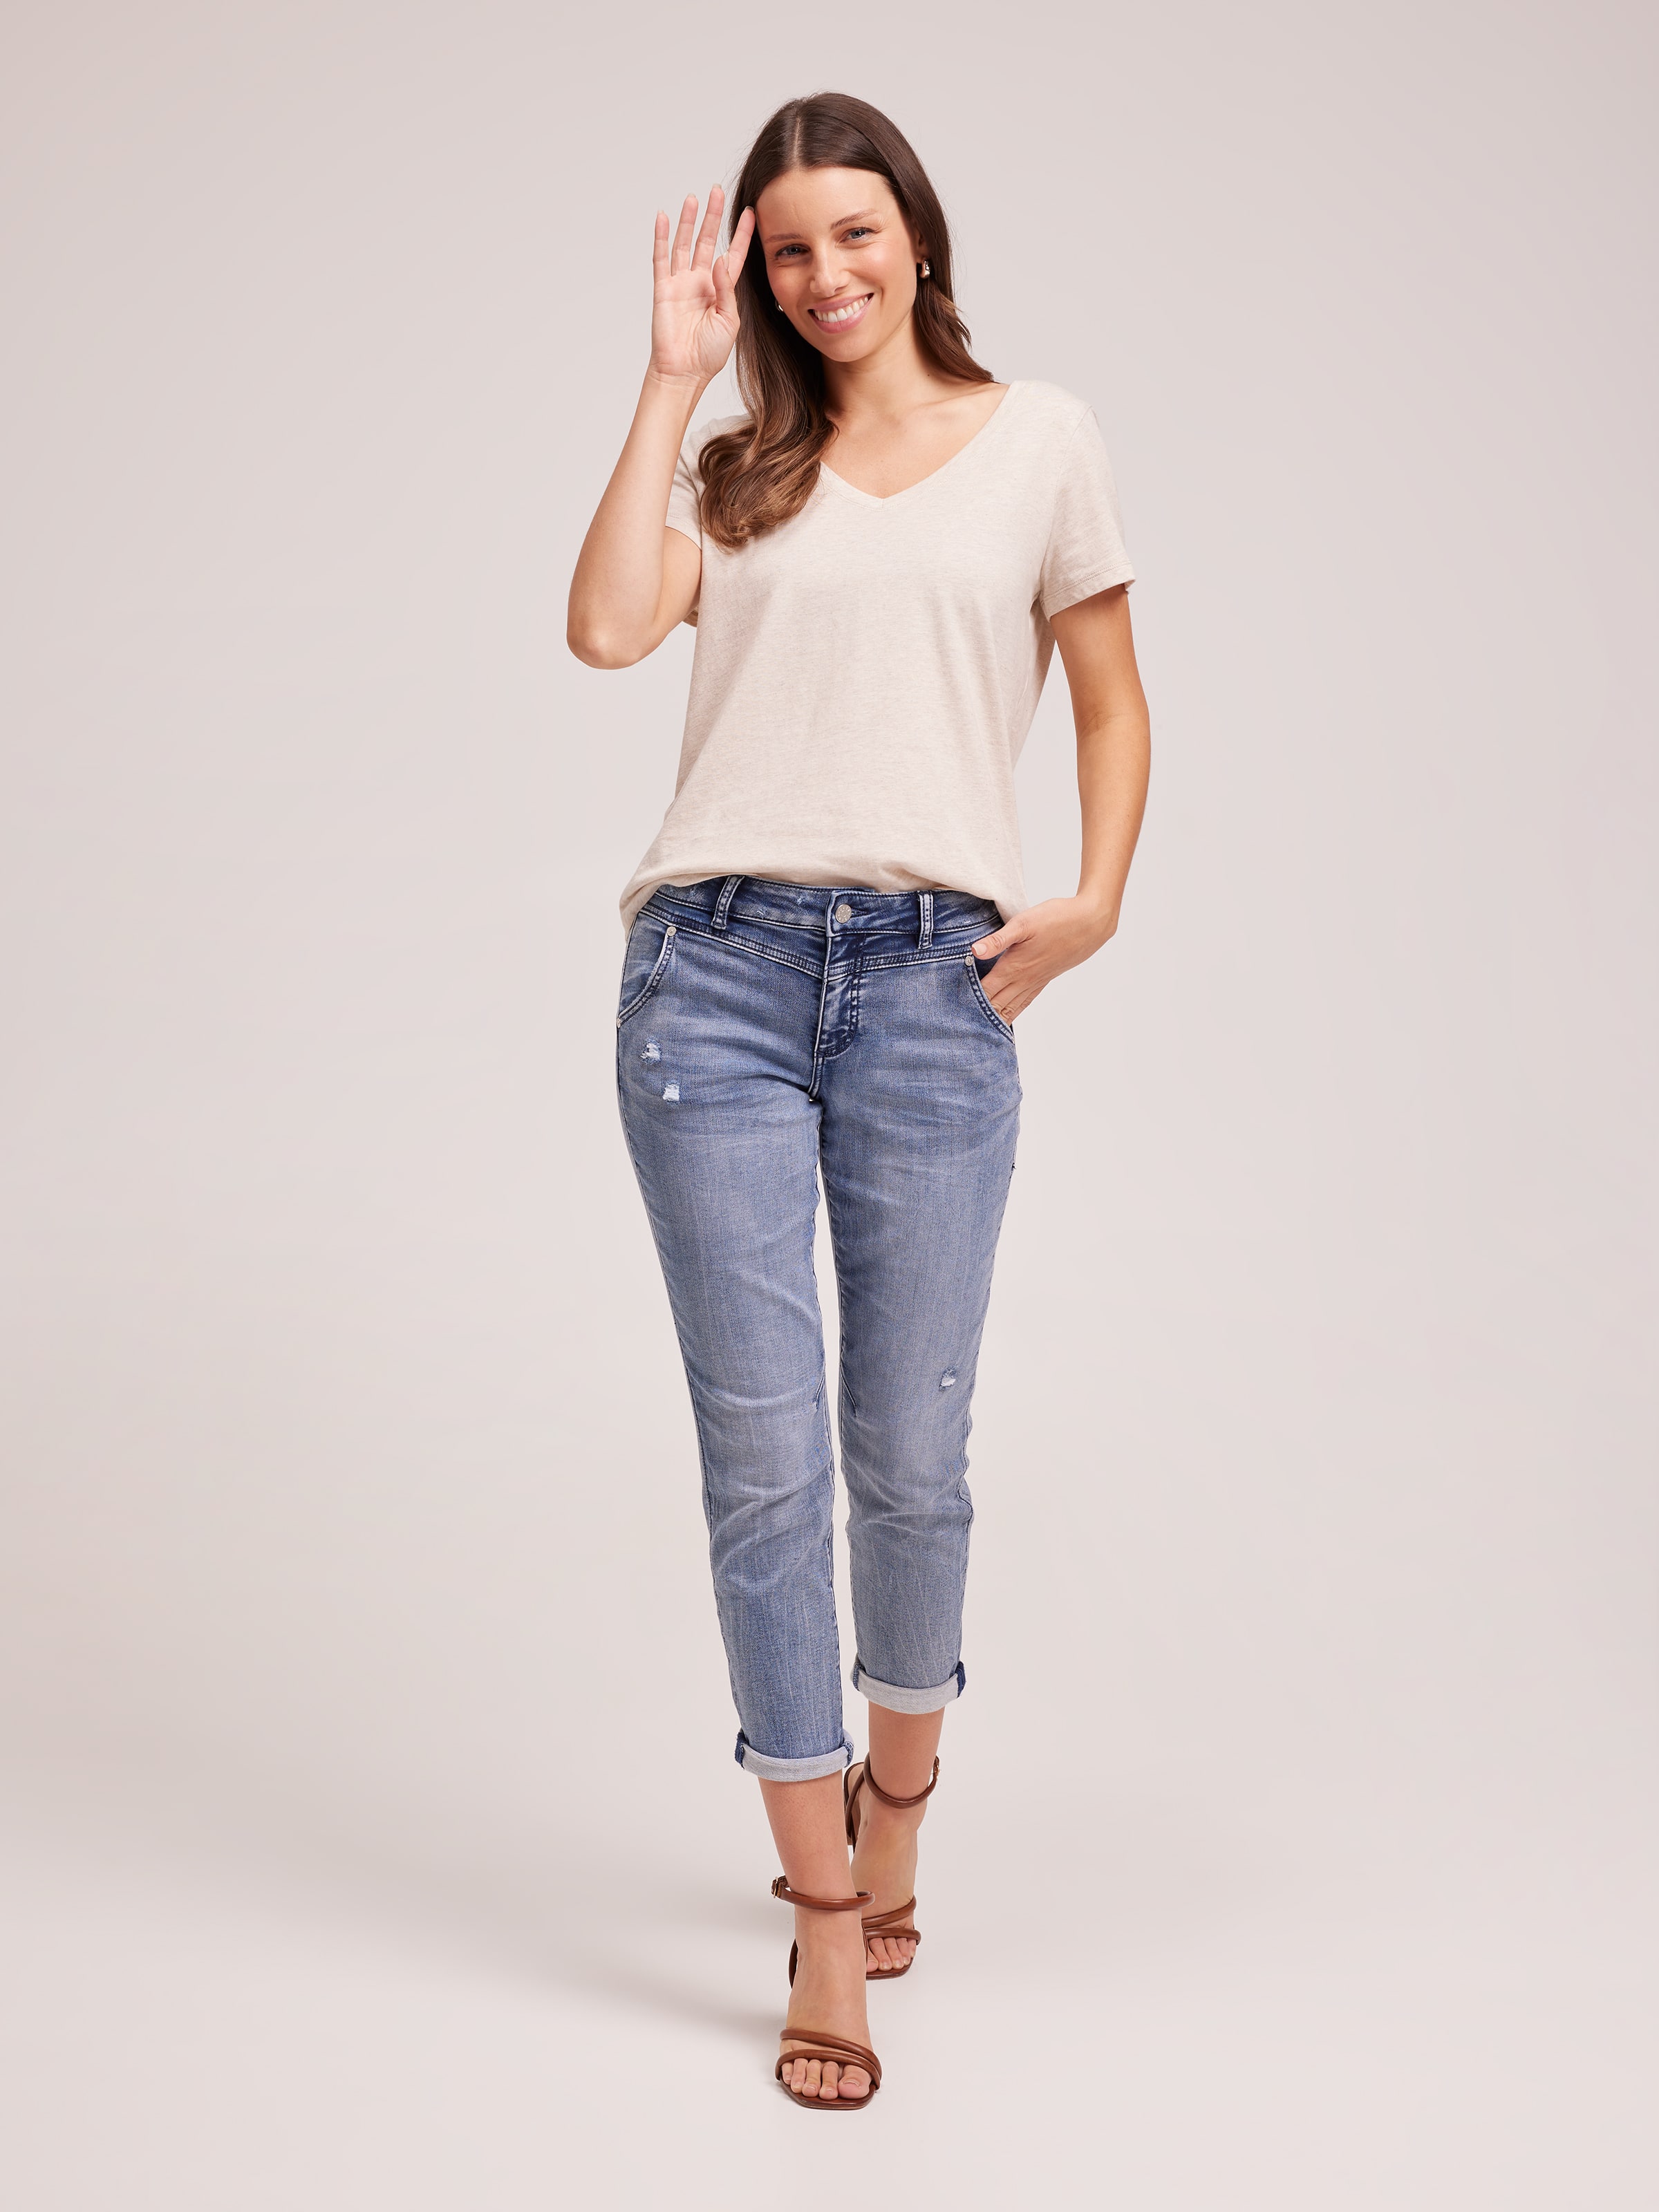 Kmart Slim Straight Distressed Jeans-Light Wash Size: 6, Price History &  Comparison